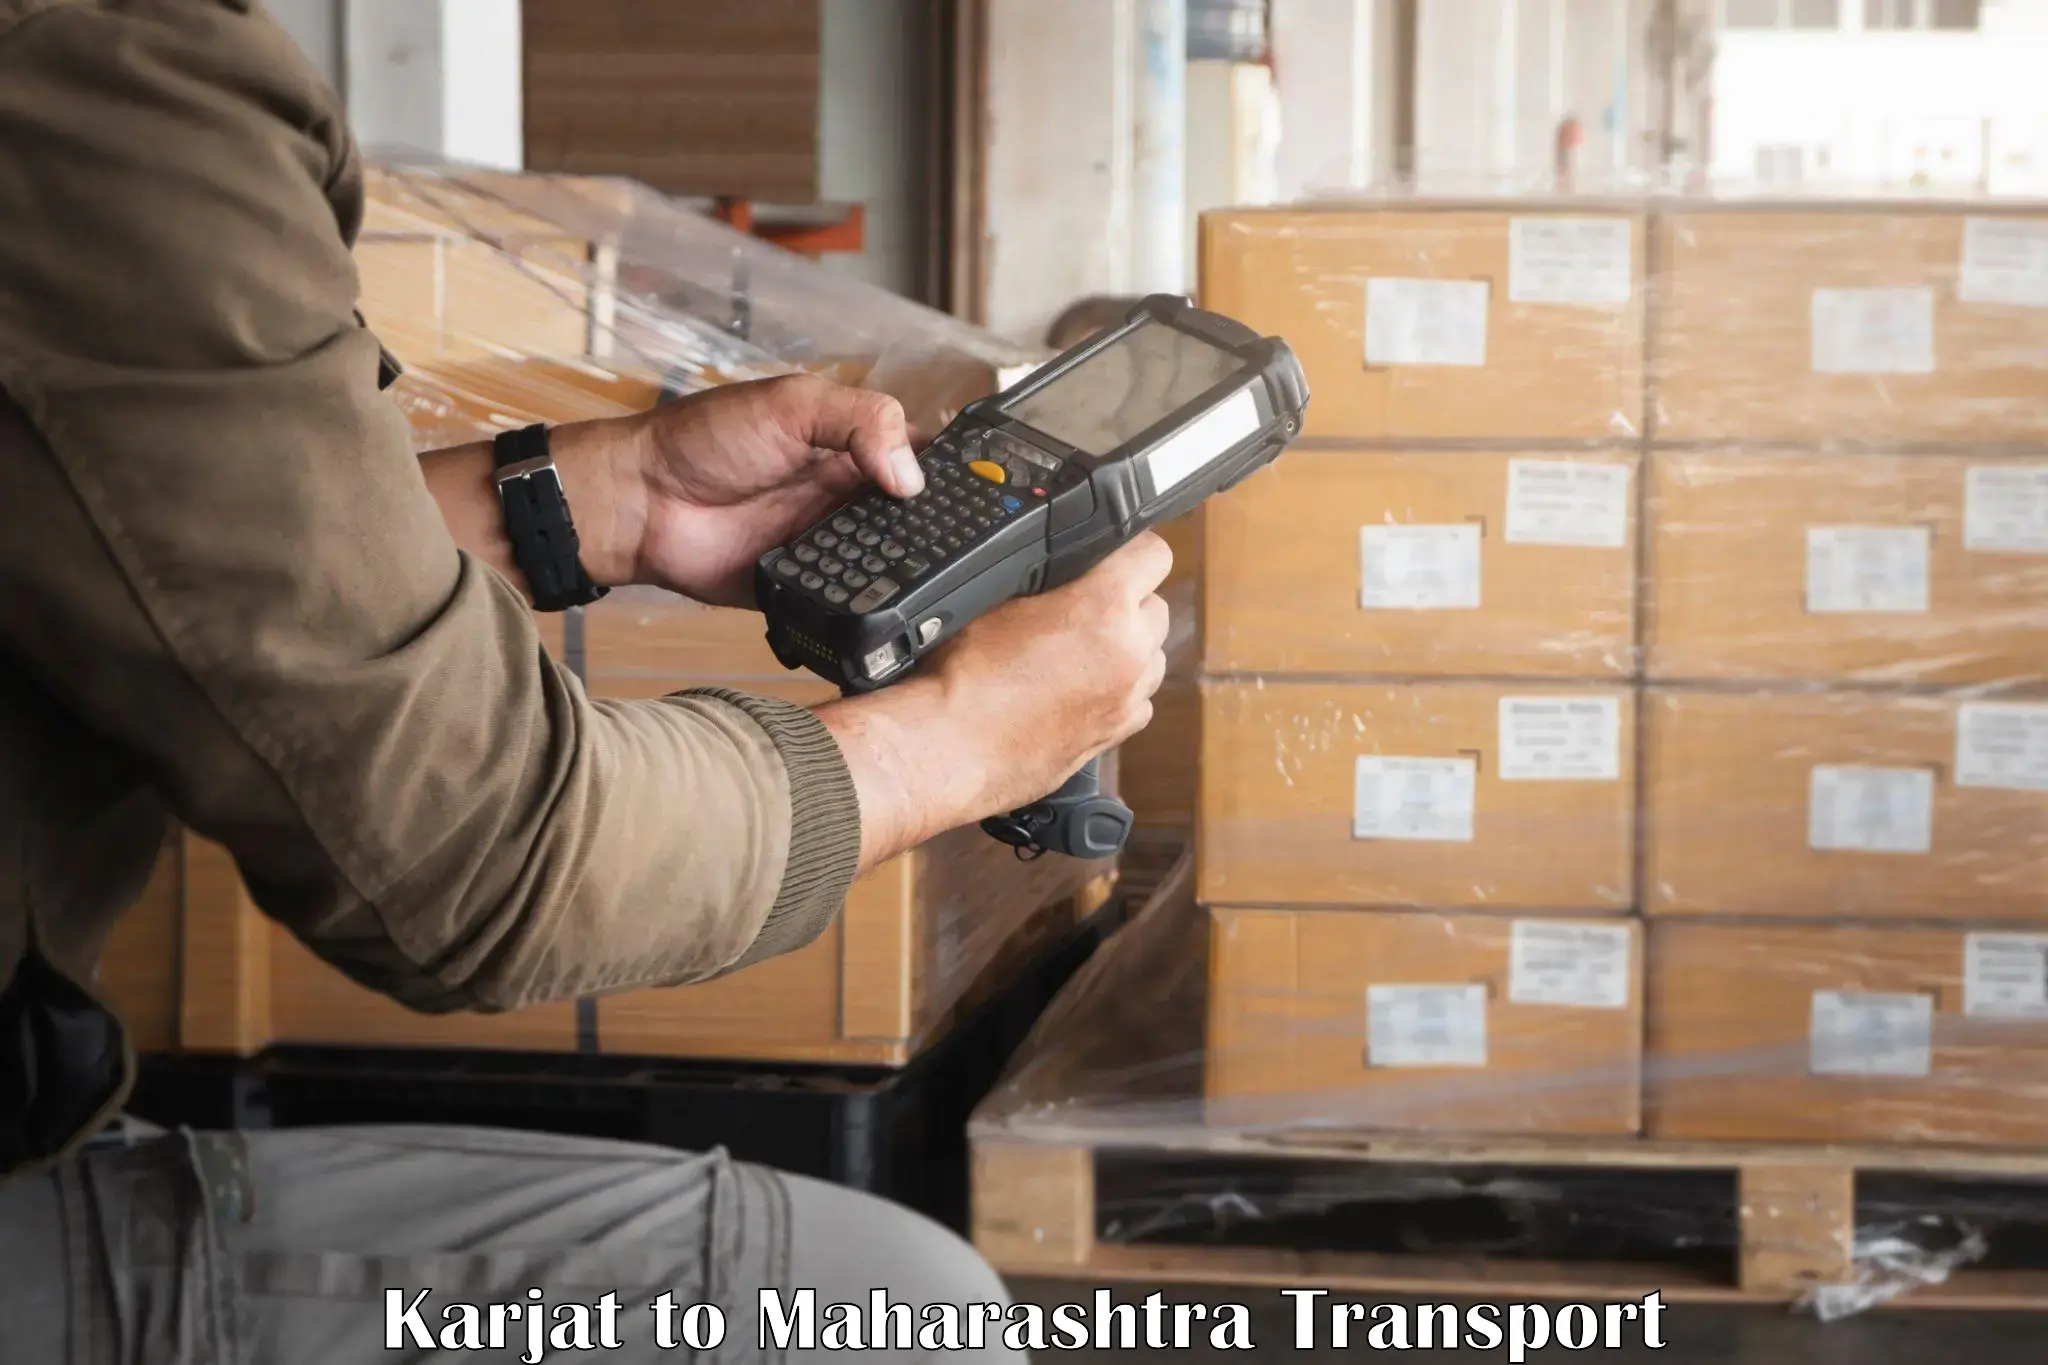 Domestic goods transportation services Karjat to Solapur